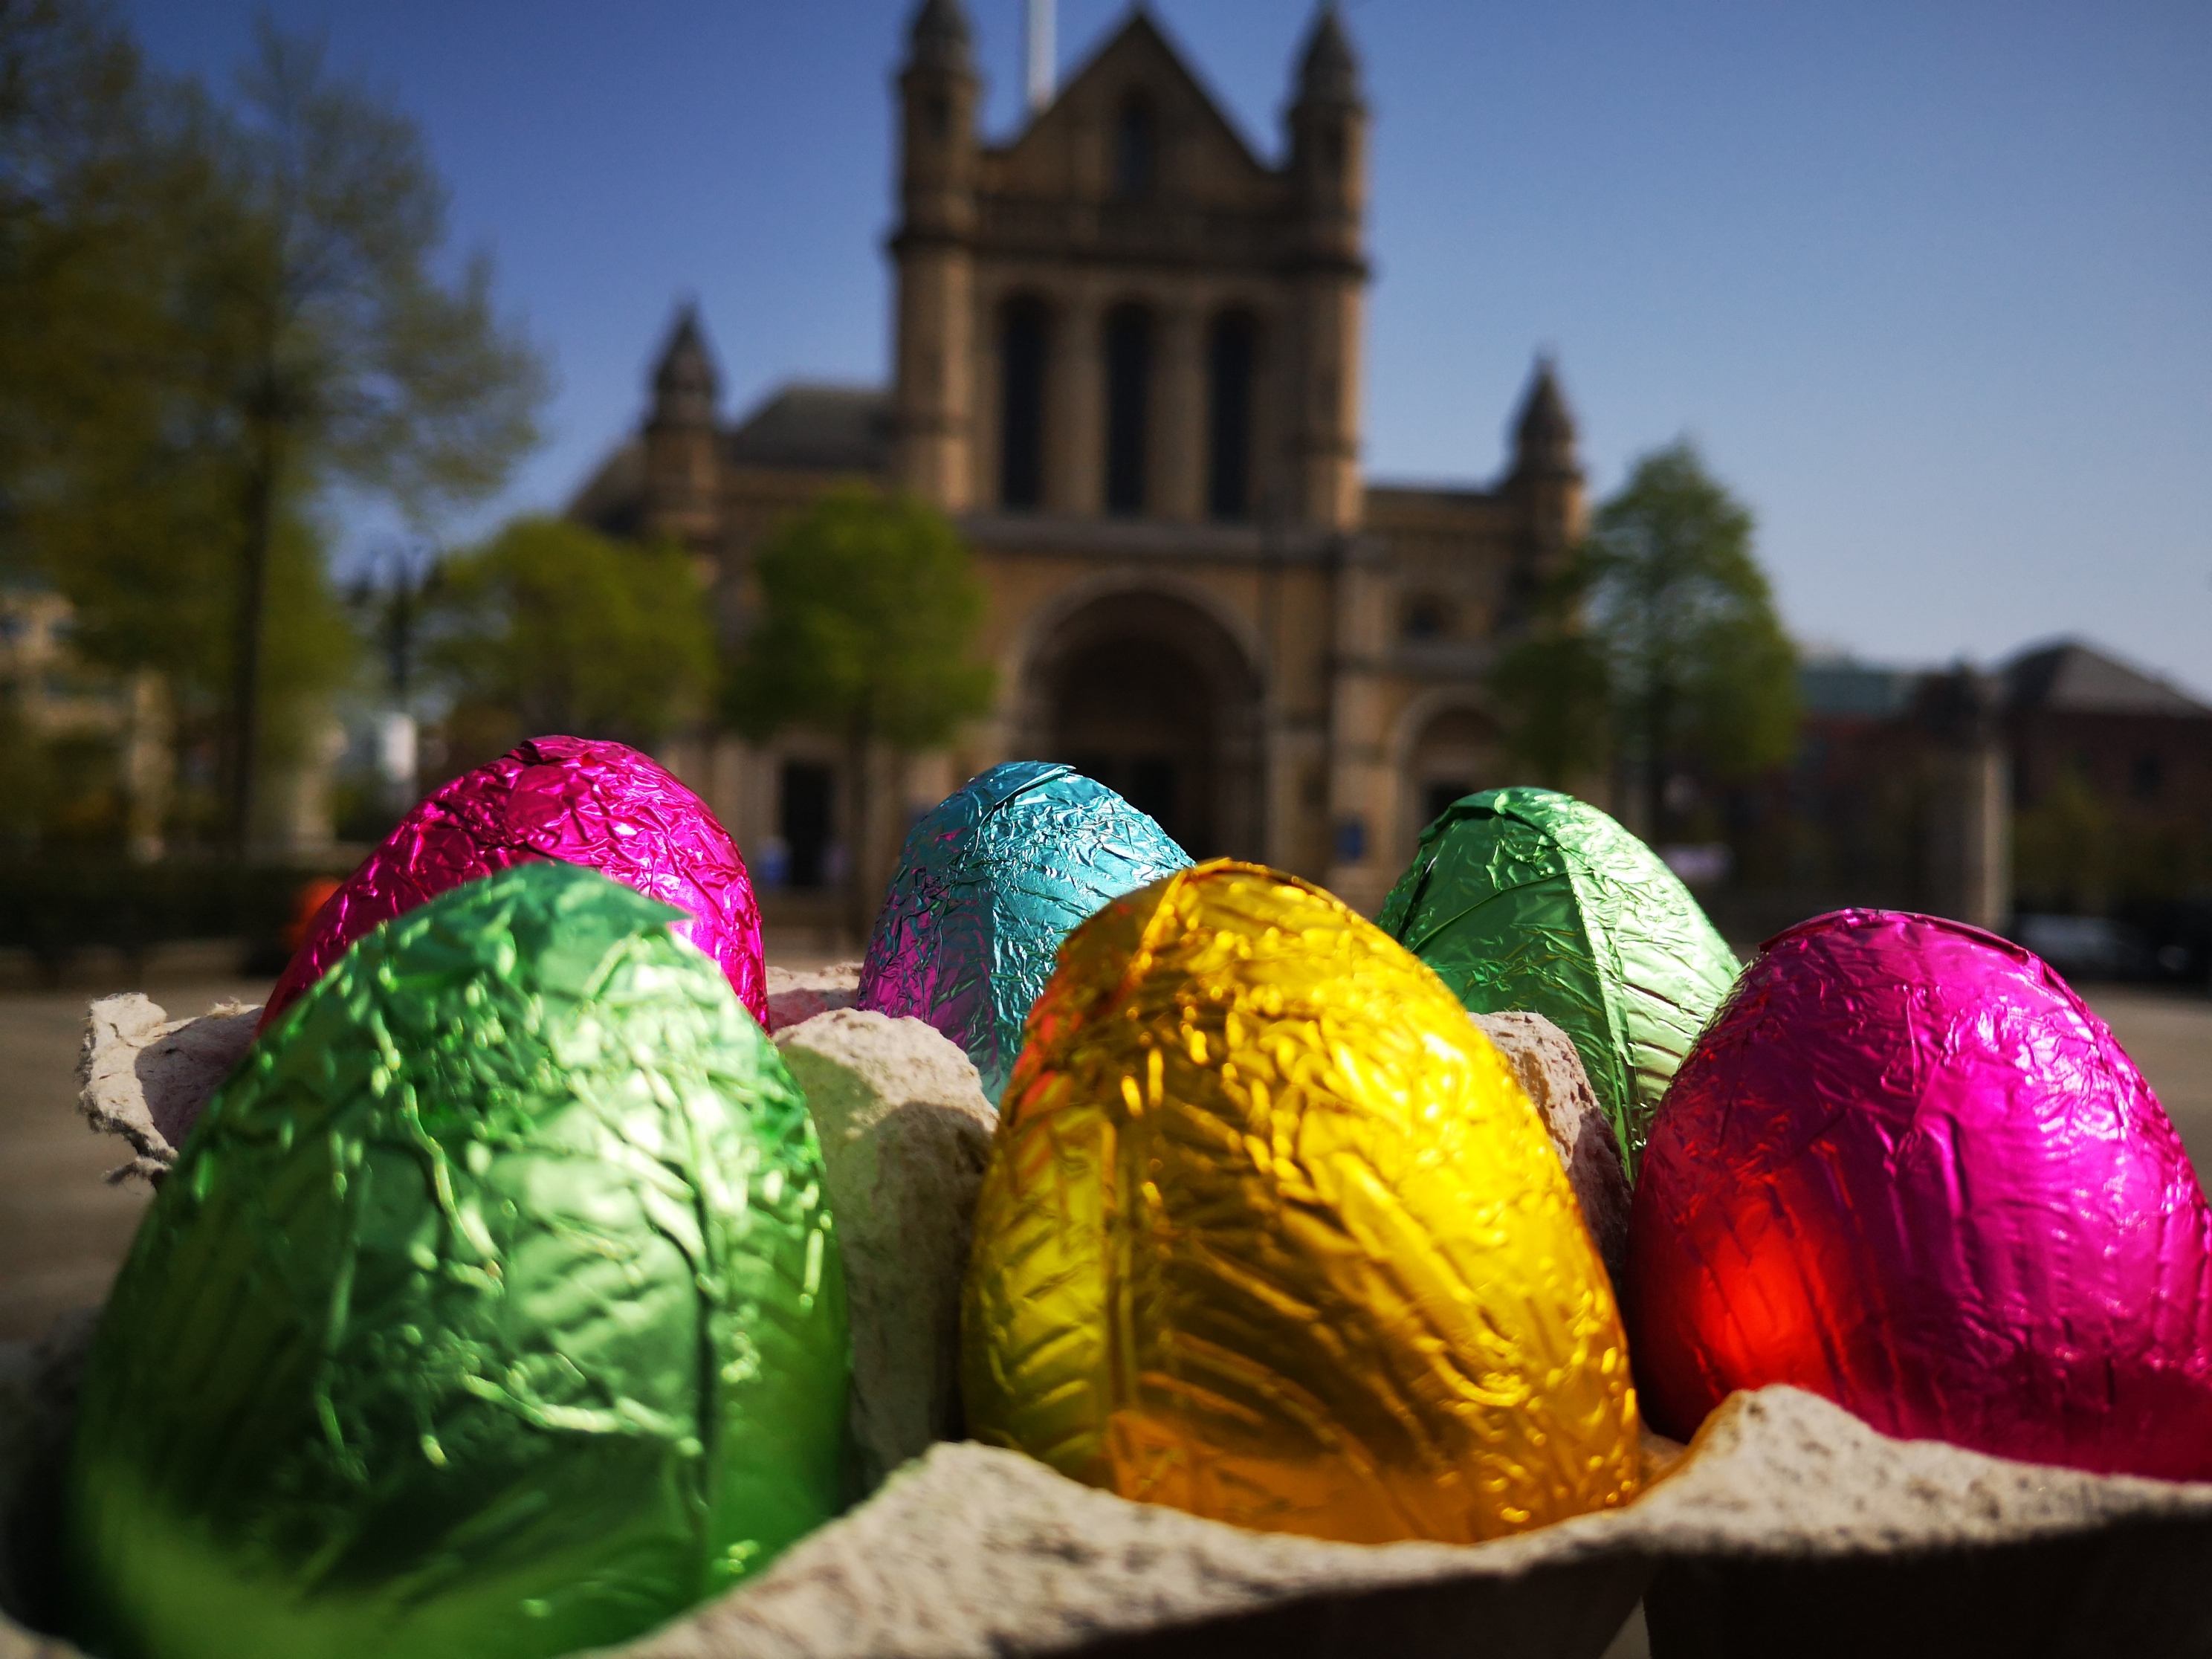 Easter egg hunt